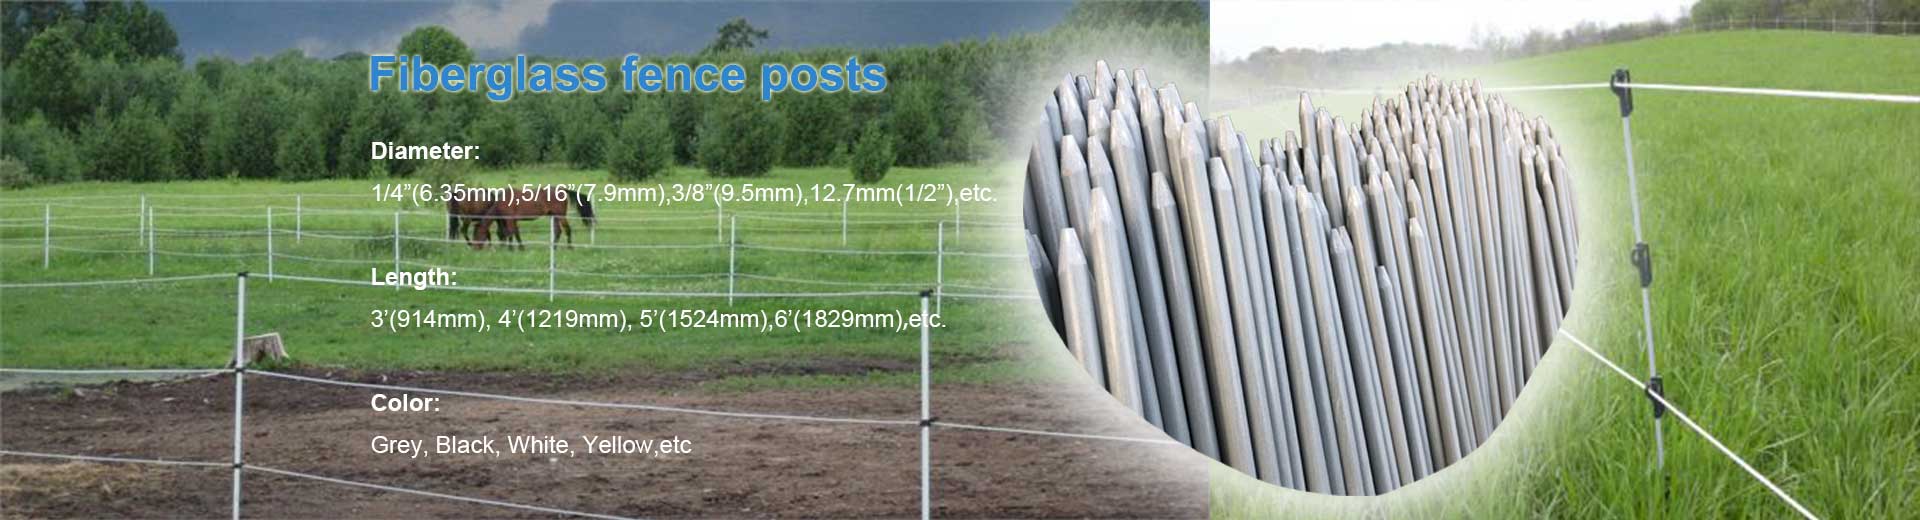 fiberglass fence post